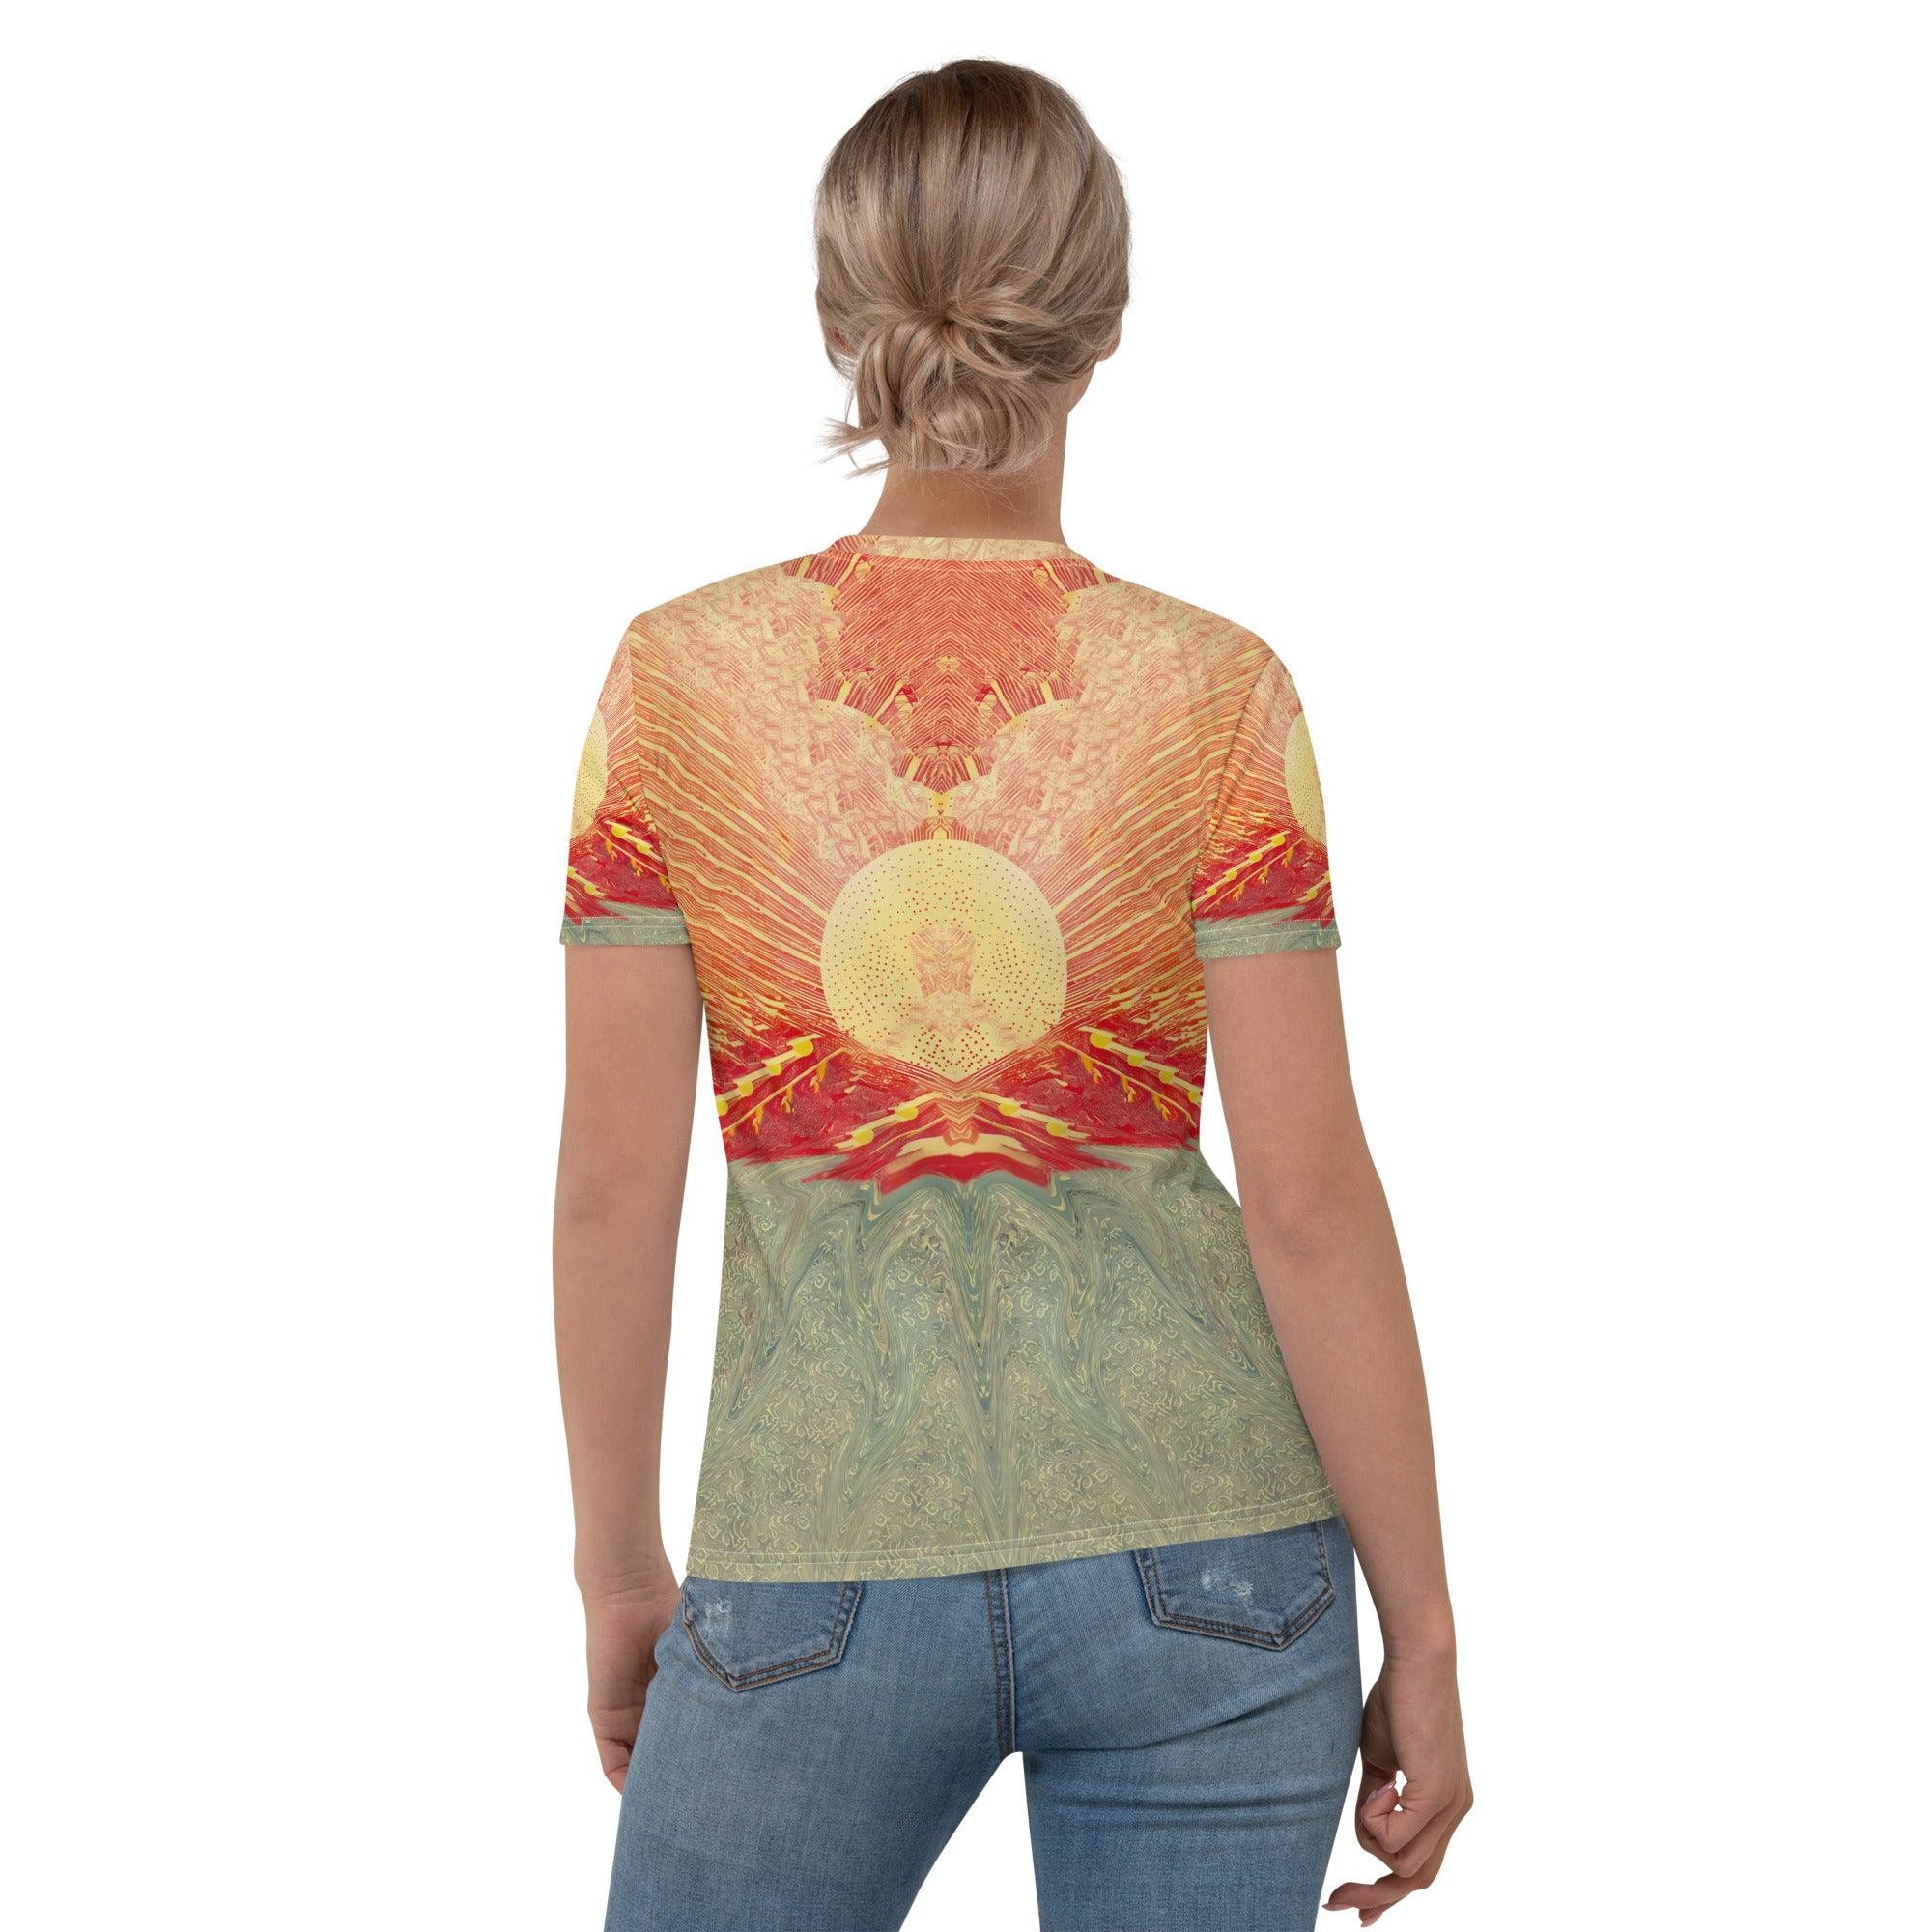 Surfing Horizon All-Over Print Women's Crew Neck T-Shirt - Beyond T-shirts